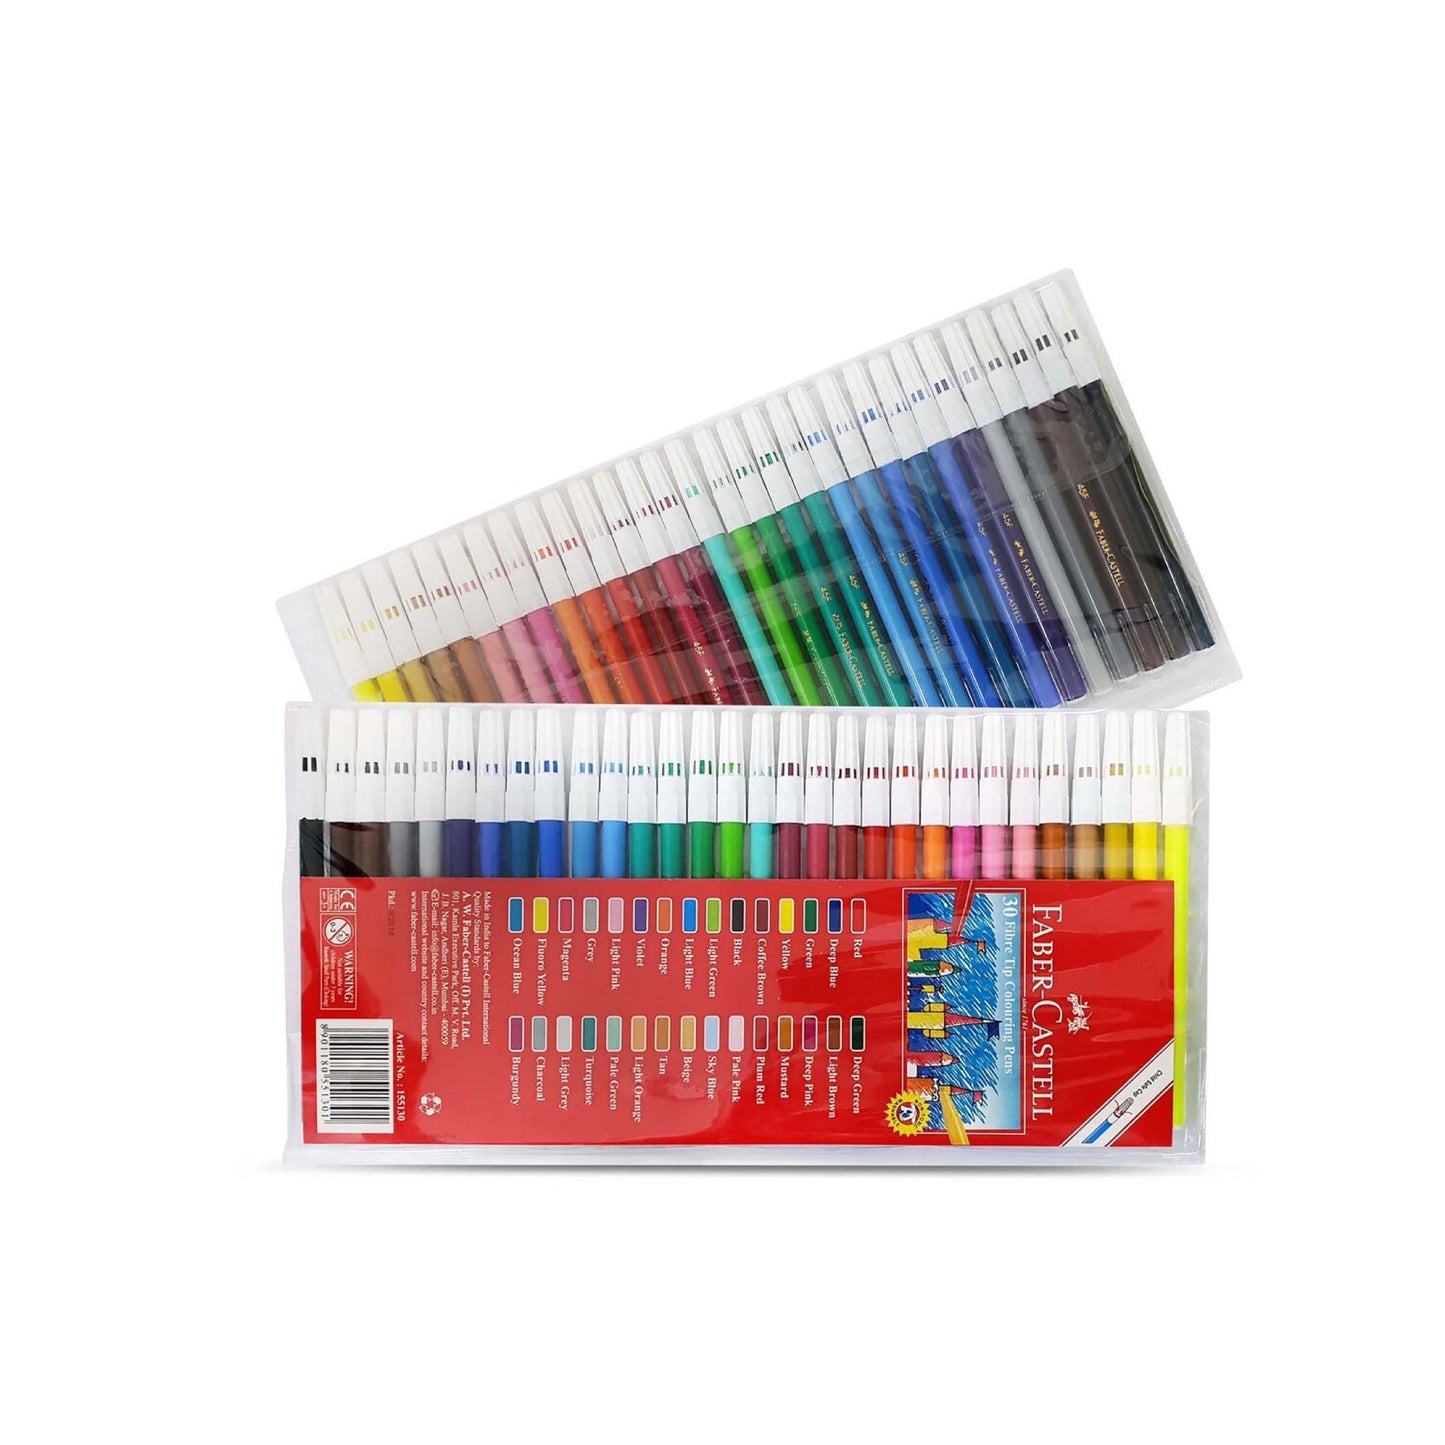 Faber Castell 30 colored markers || الوان شينيه فيبر كاستل 30 لون